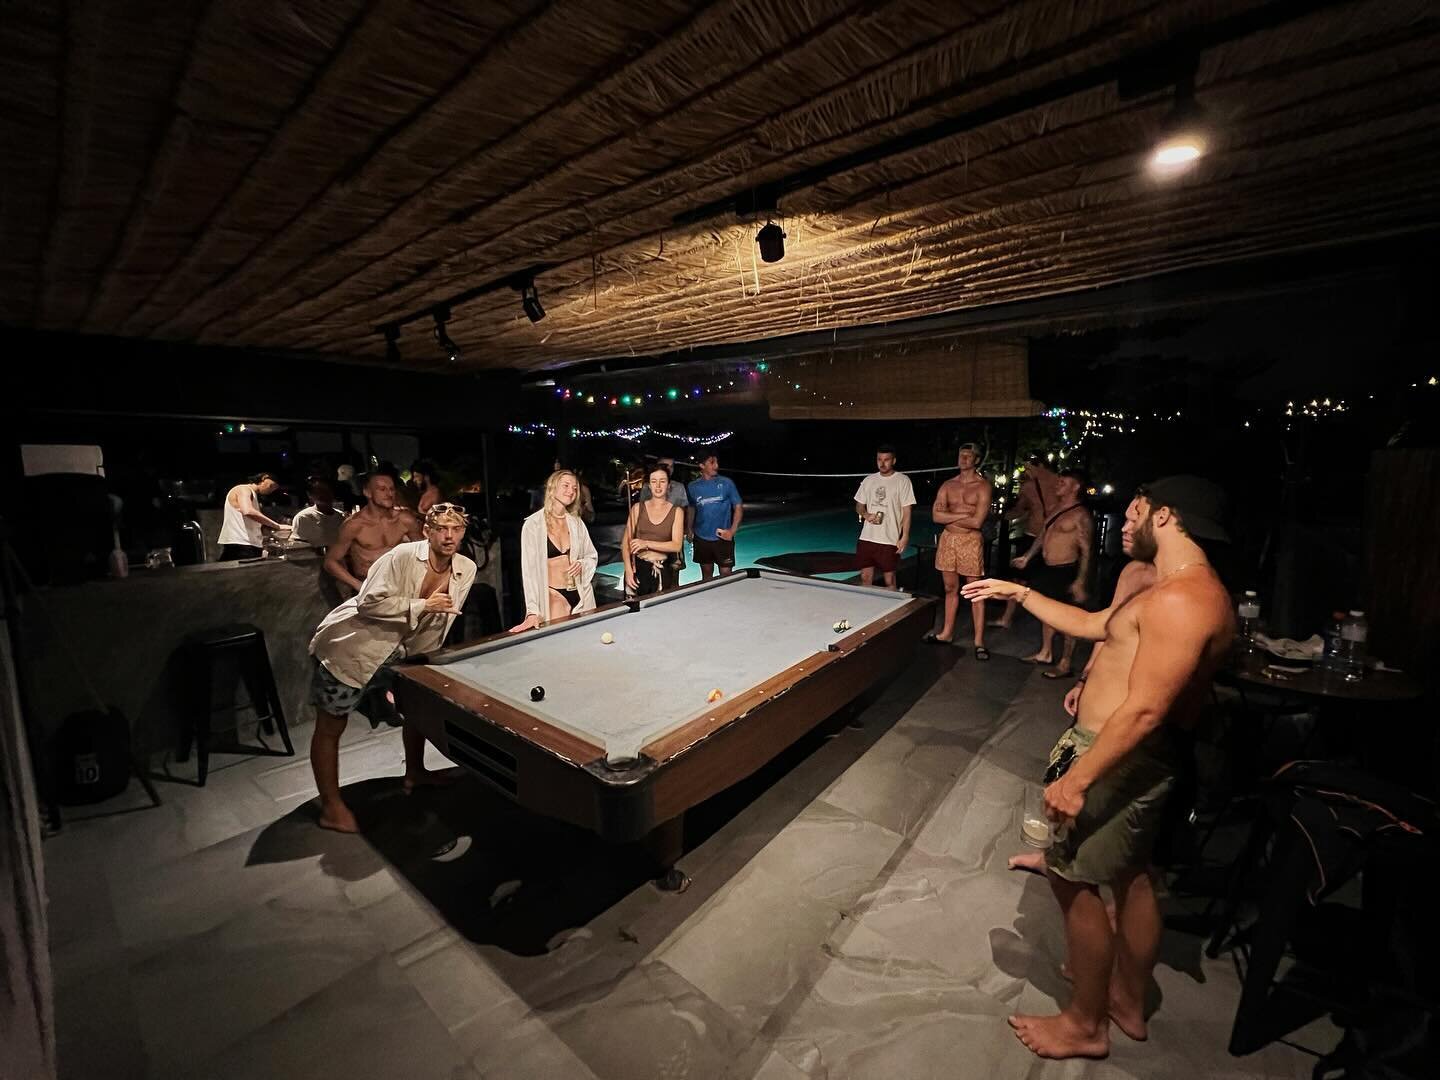 Having a blast with killer pool game 💥🎱 #savagehostelkohtao #kohtao #kohtaoisland